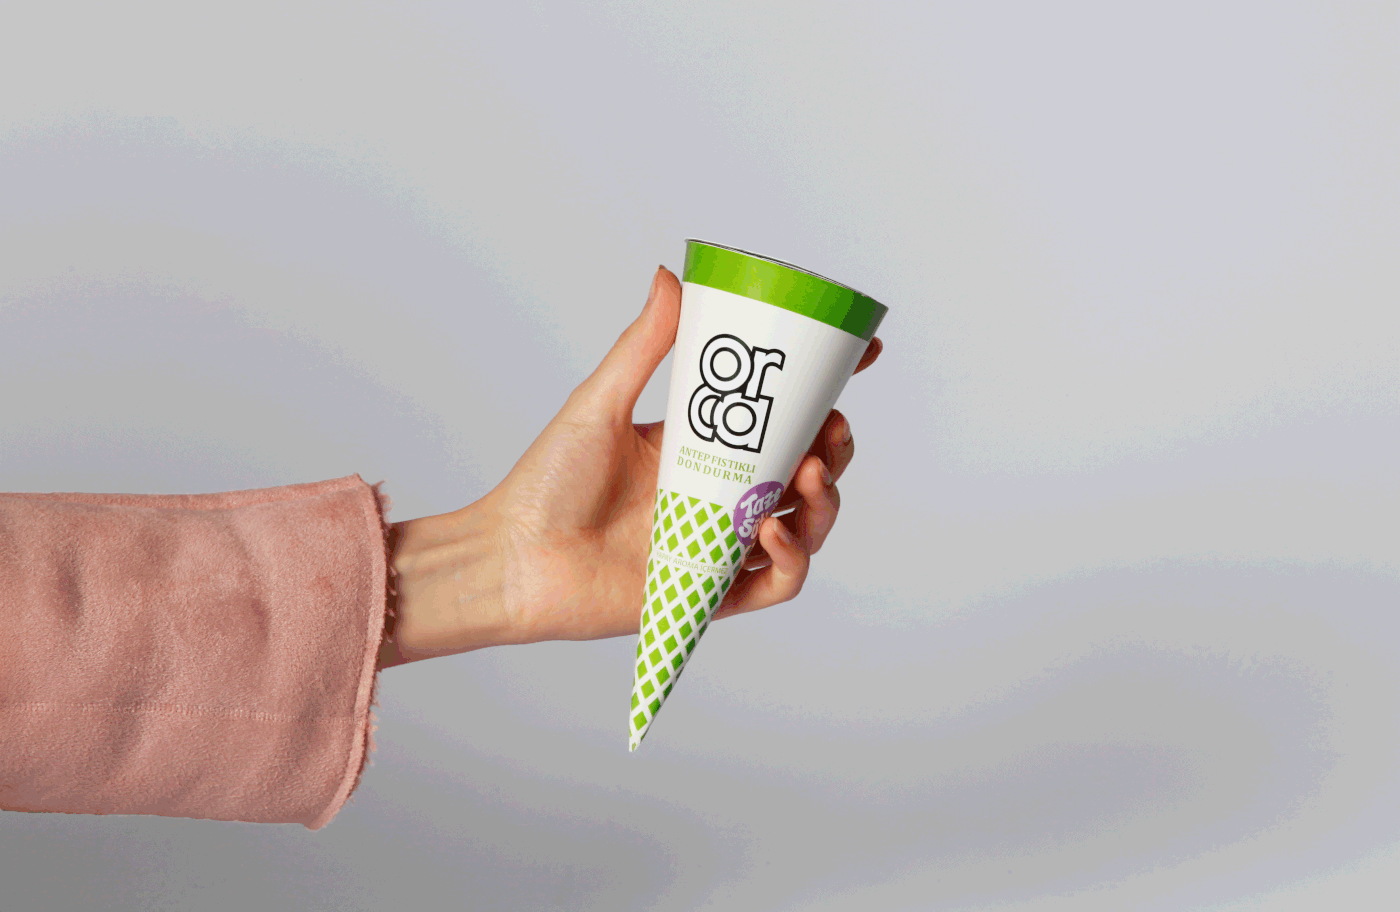 ice cream School Project brand Packaging orca logo yeditepe university design ambalaj tasarımı package